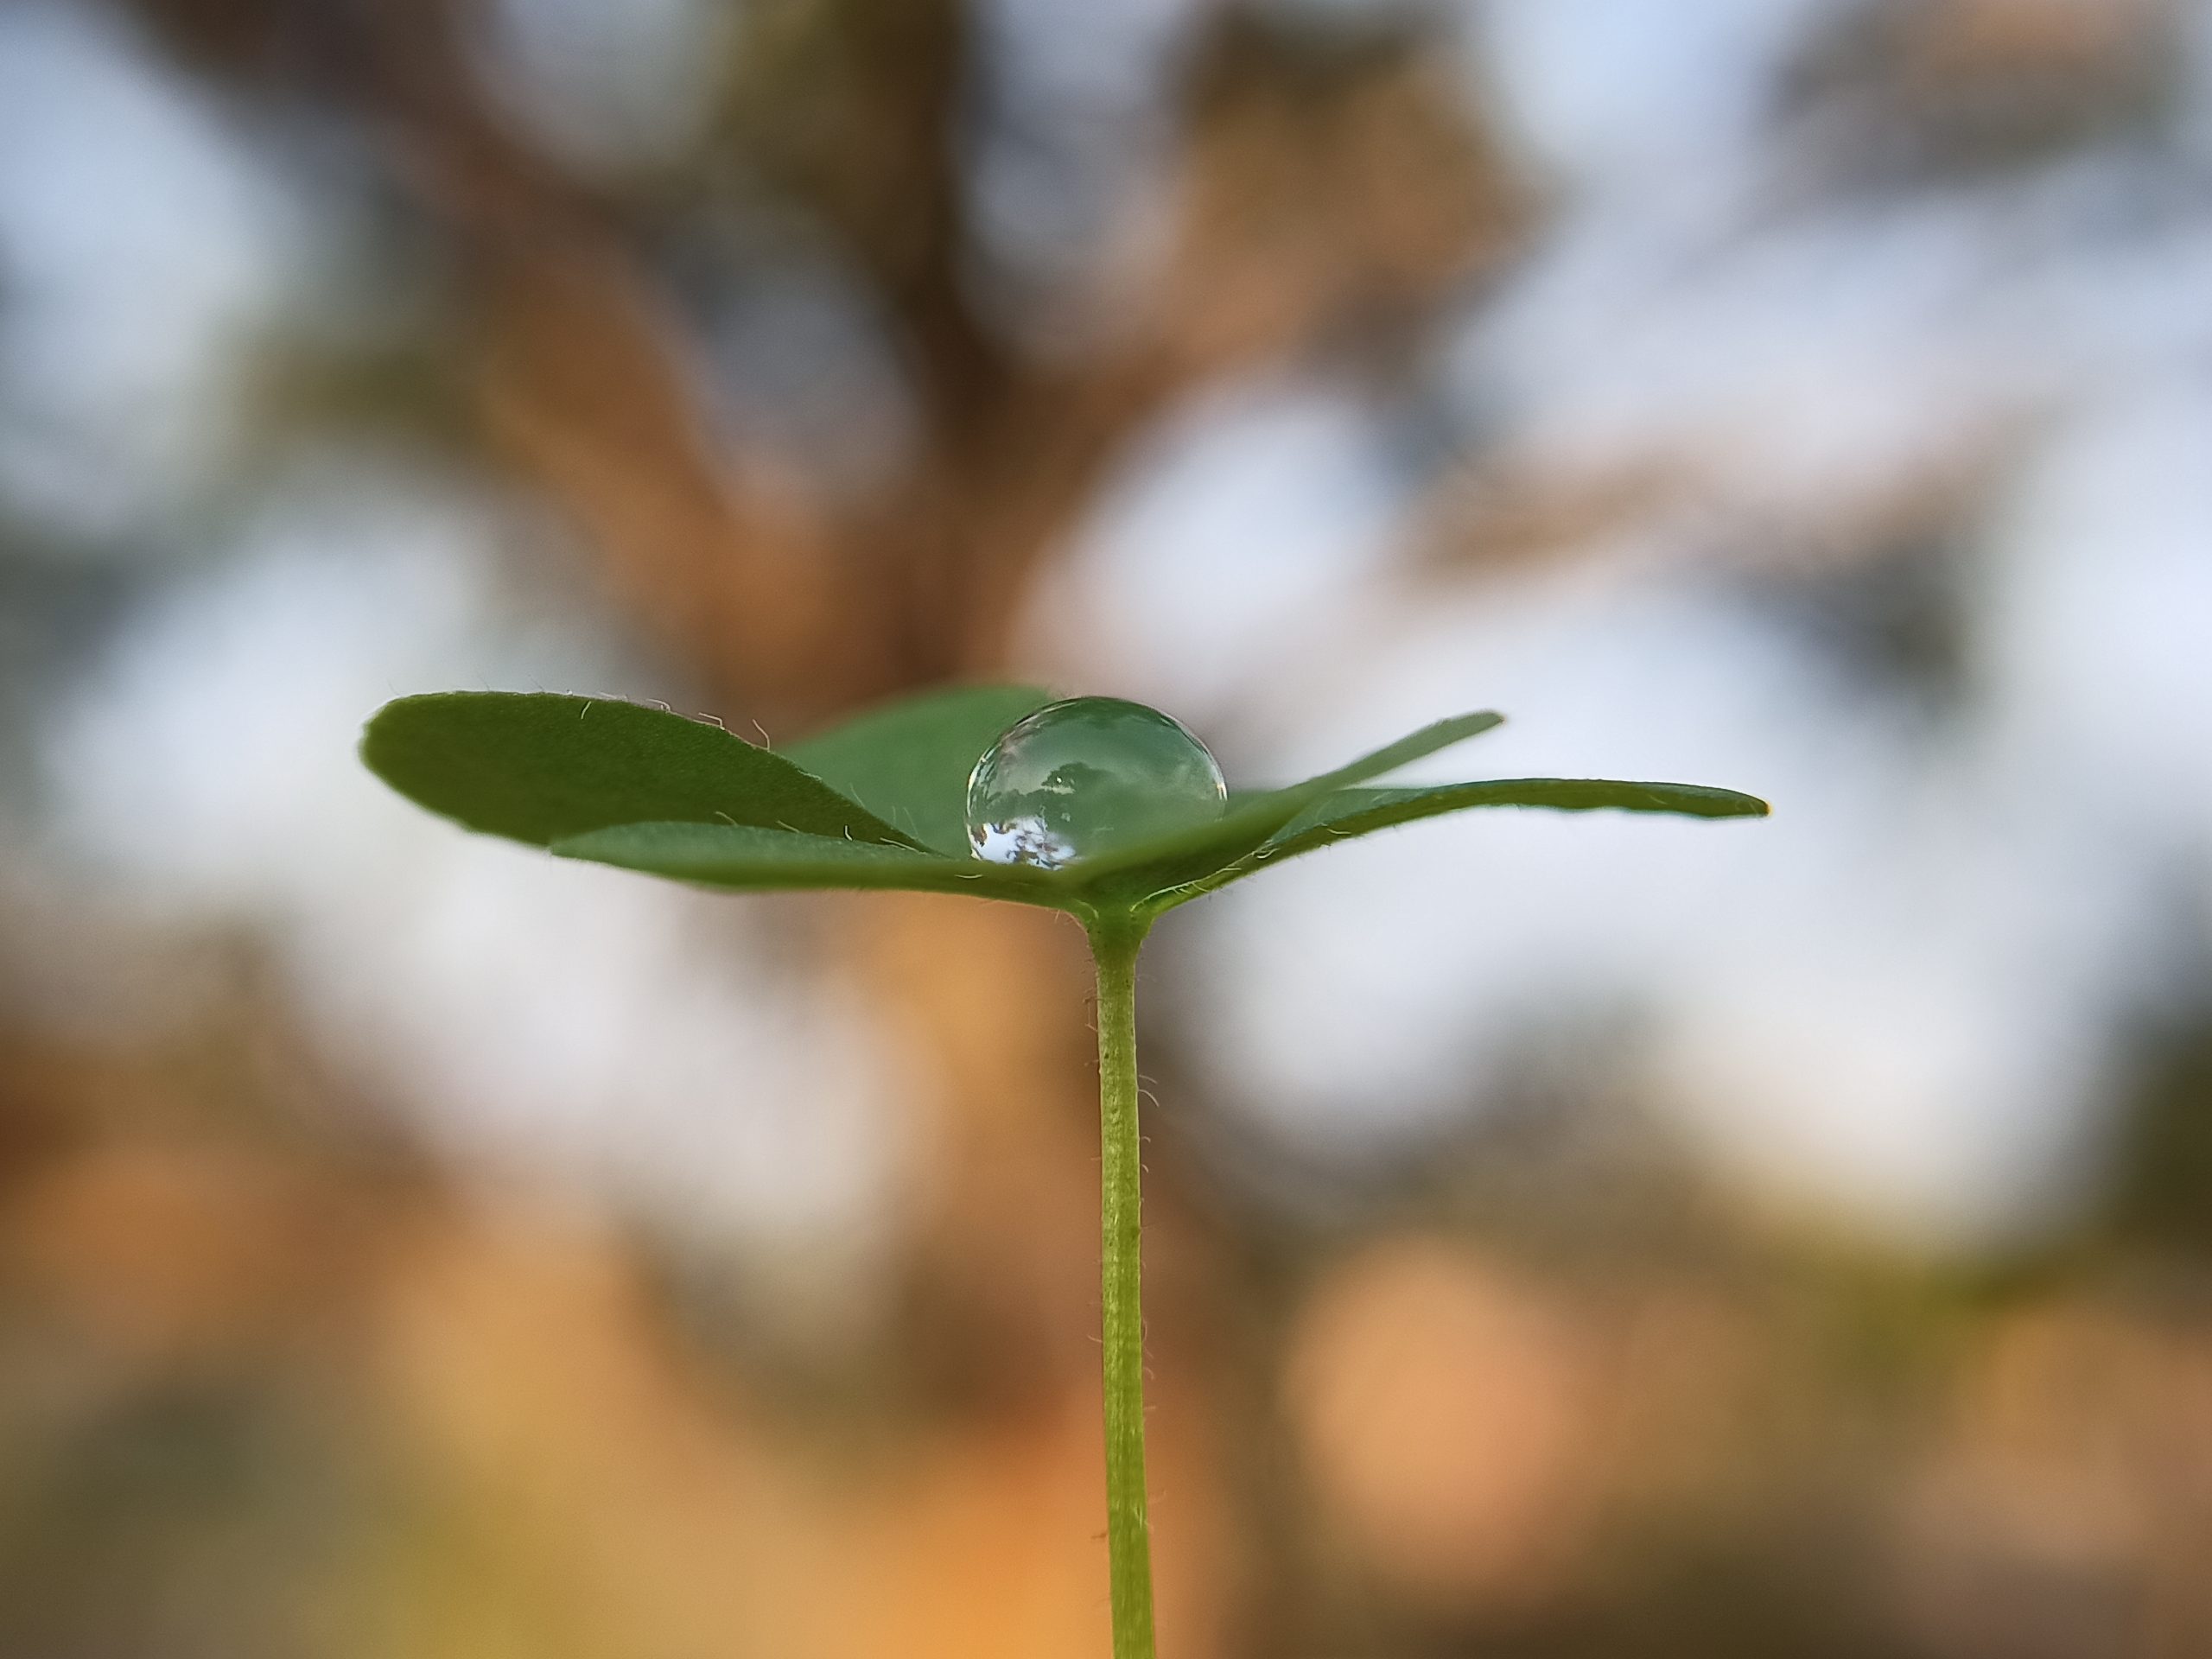 Drop on plant leaf